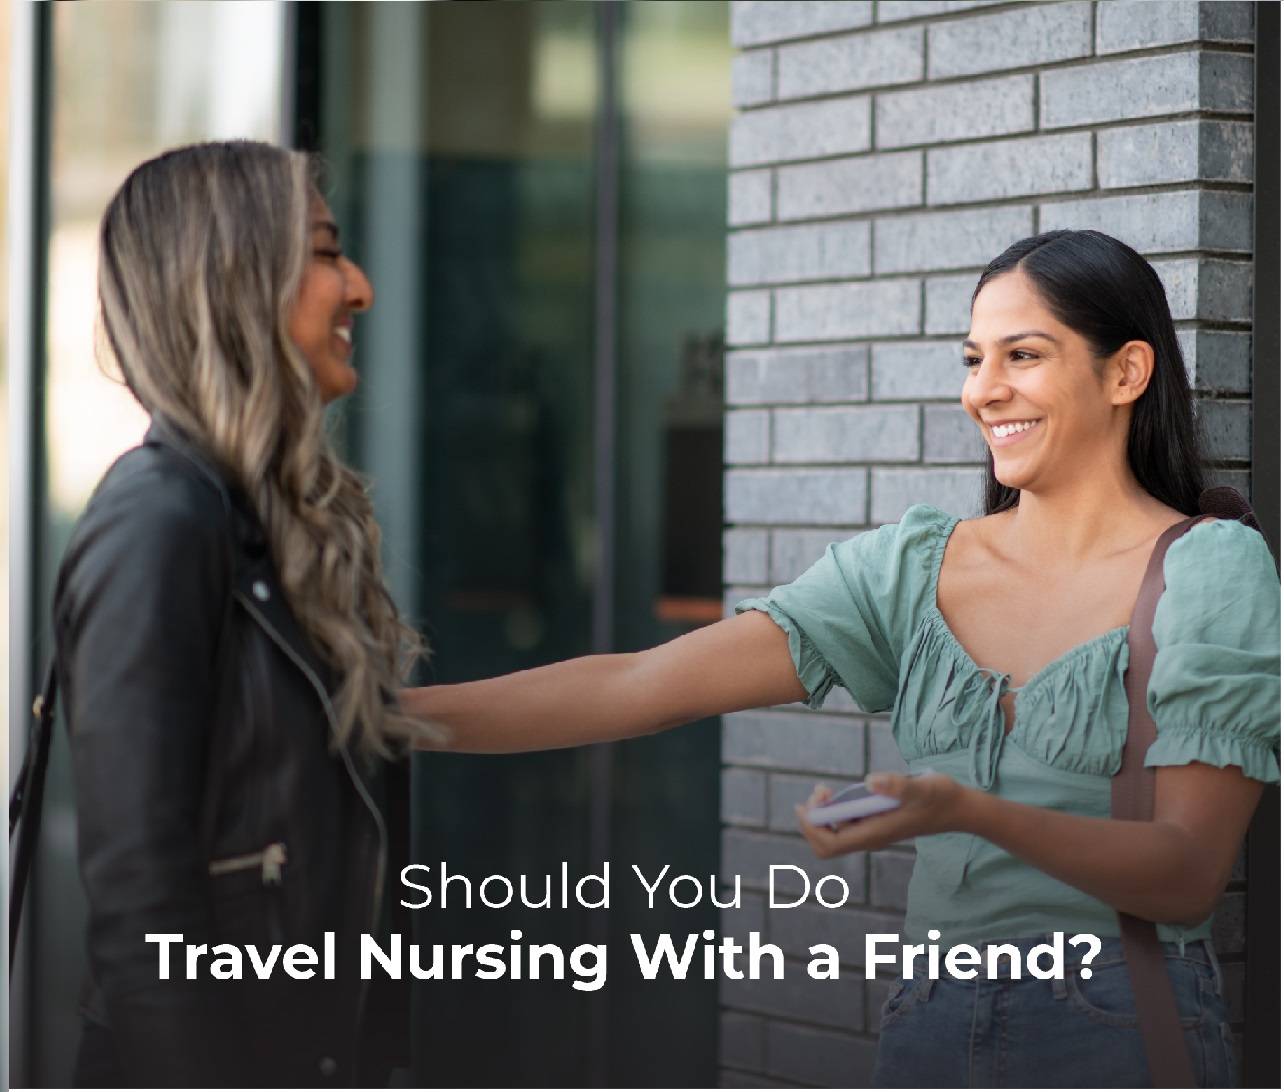 Should You Do Travel Nursing With a Friend?